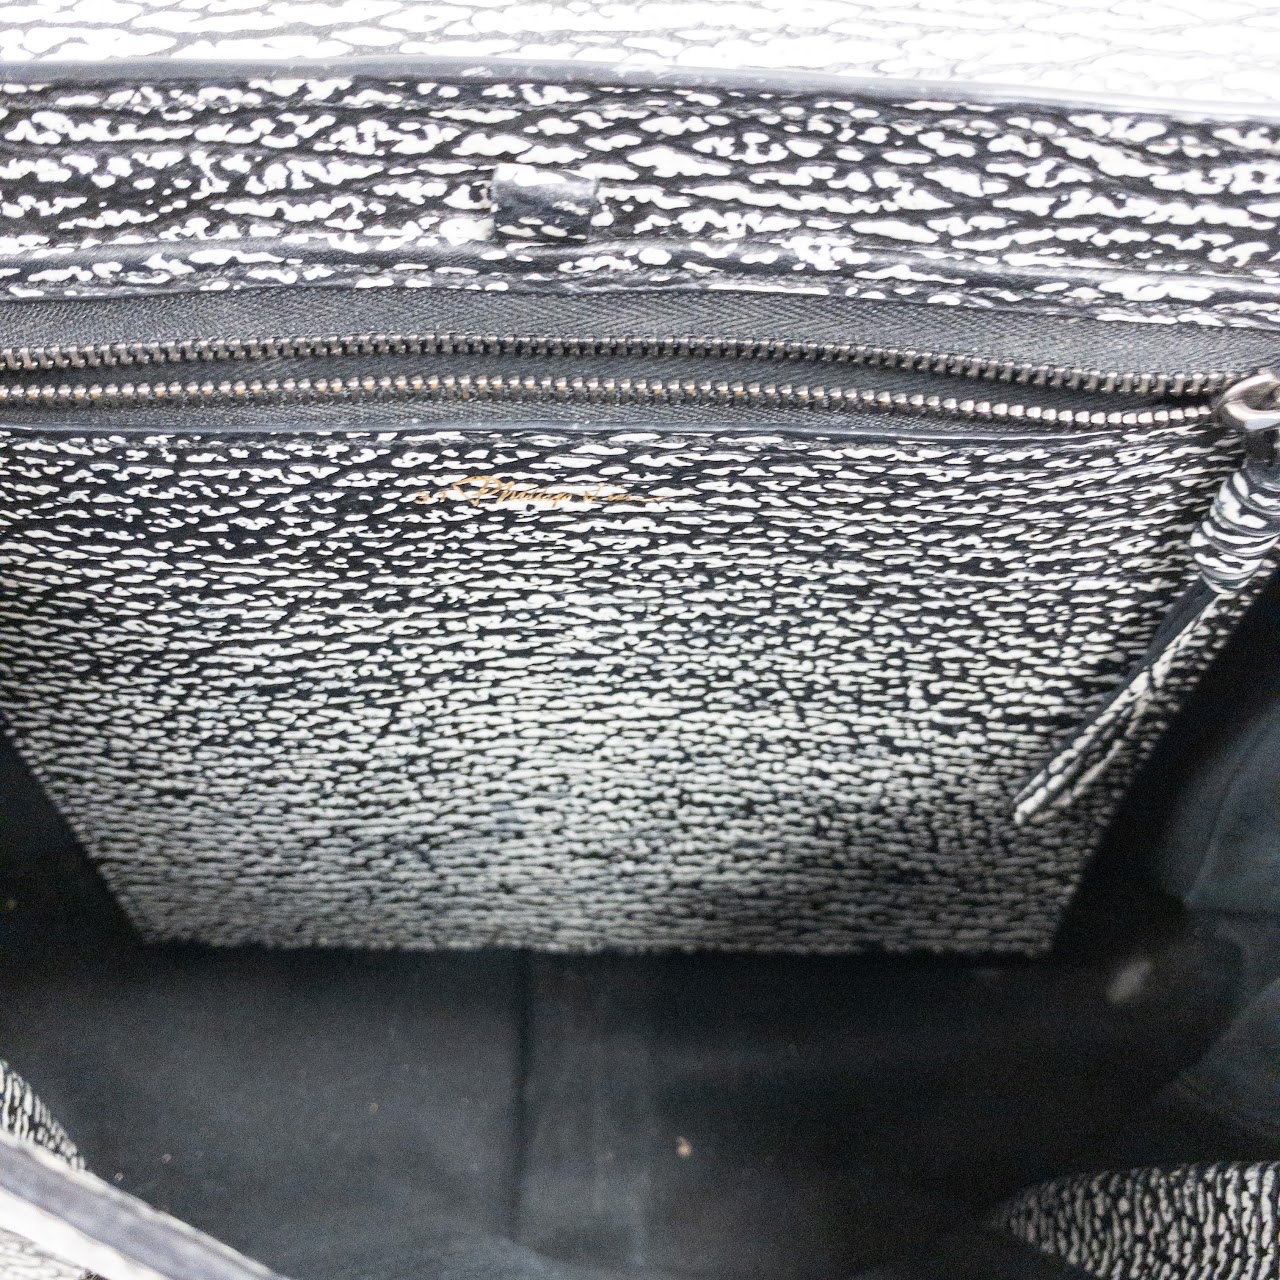 3.1 Phillip Lim Shark Embossed Leather Pashli Satchel Bag